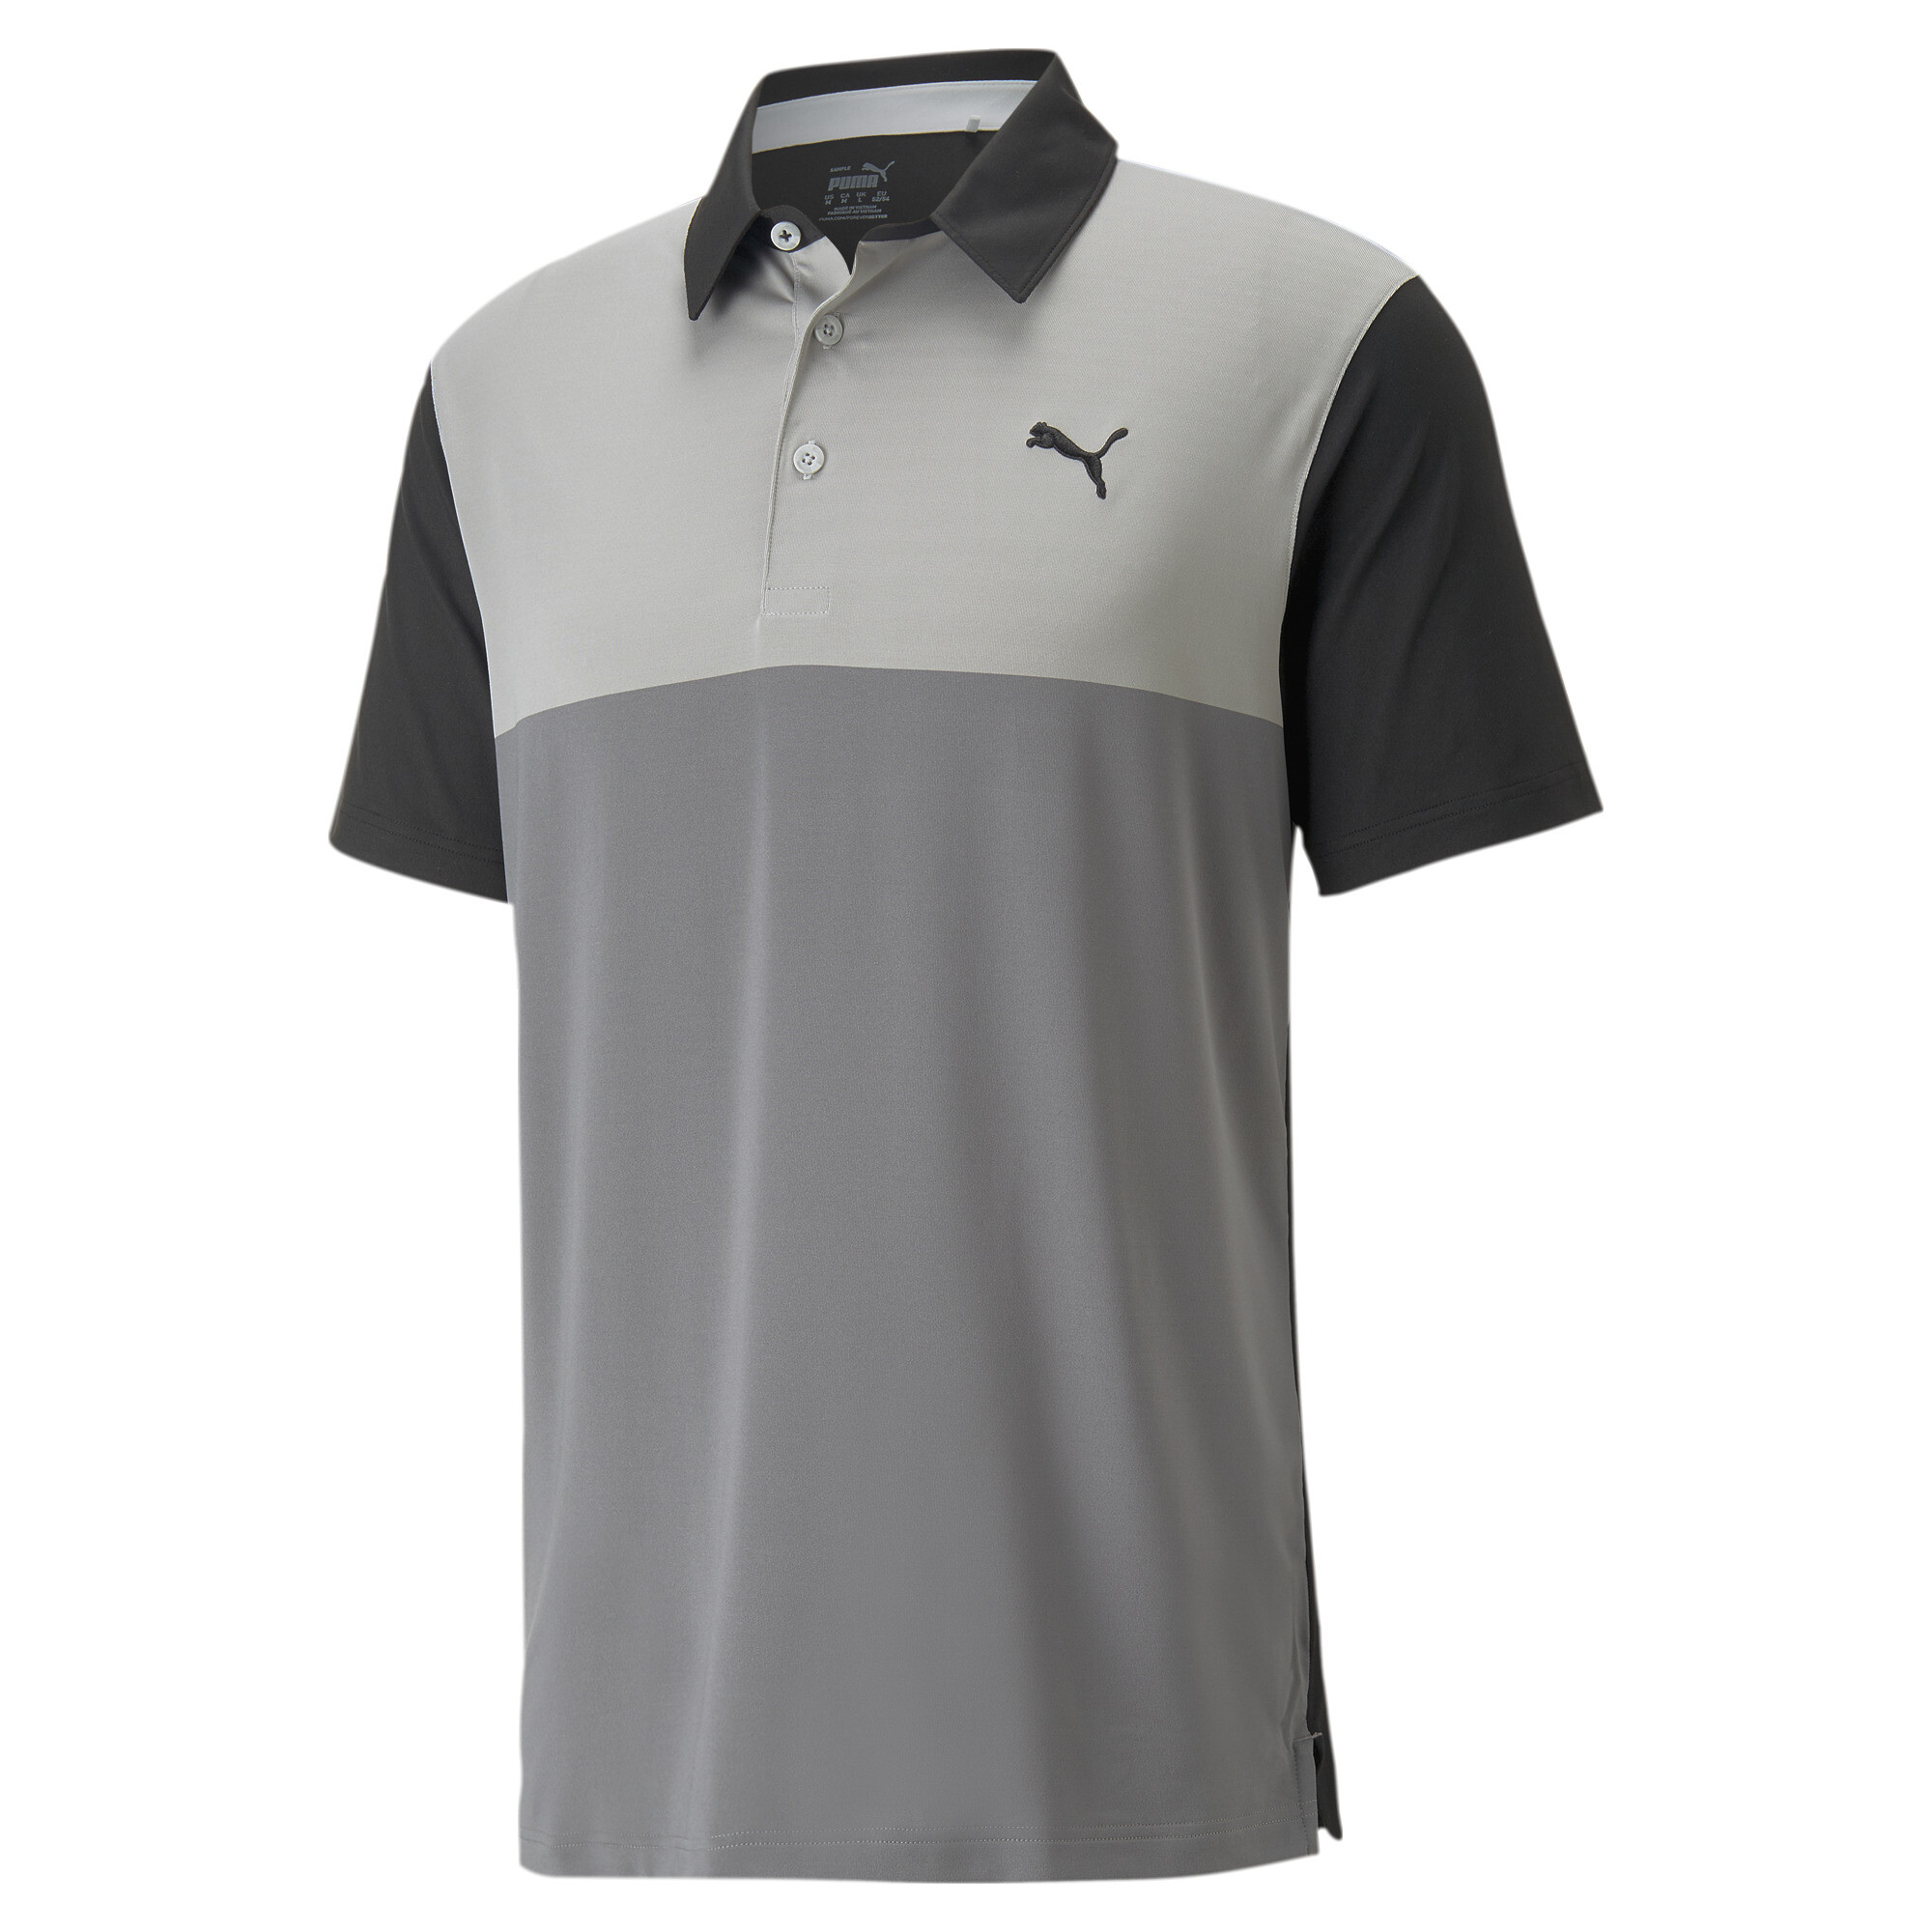 Men's Puma Cloudspun Colourblock Golf Polo Shirt T-Shirt, Black T-Shirt, Size 3XL T-Shirt, Clothing